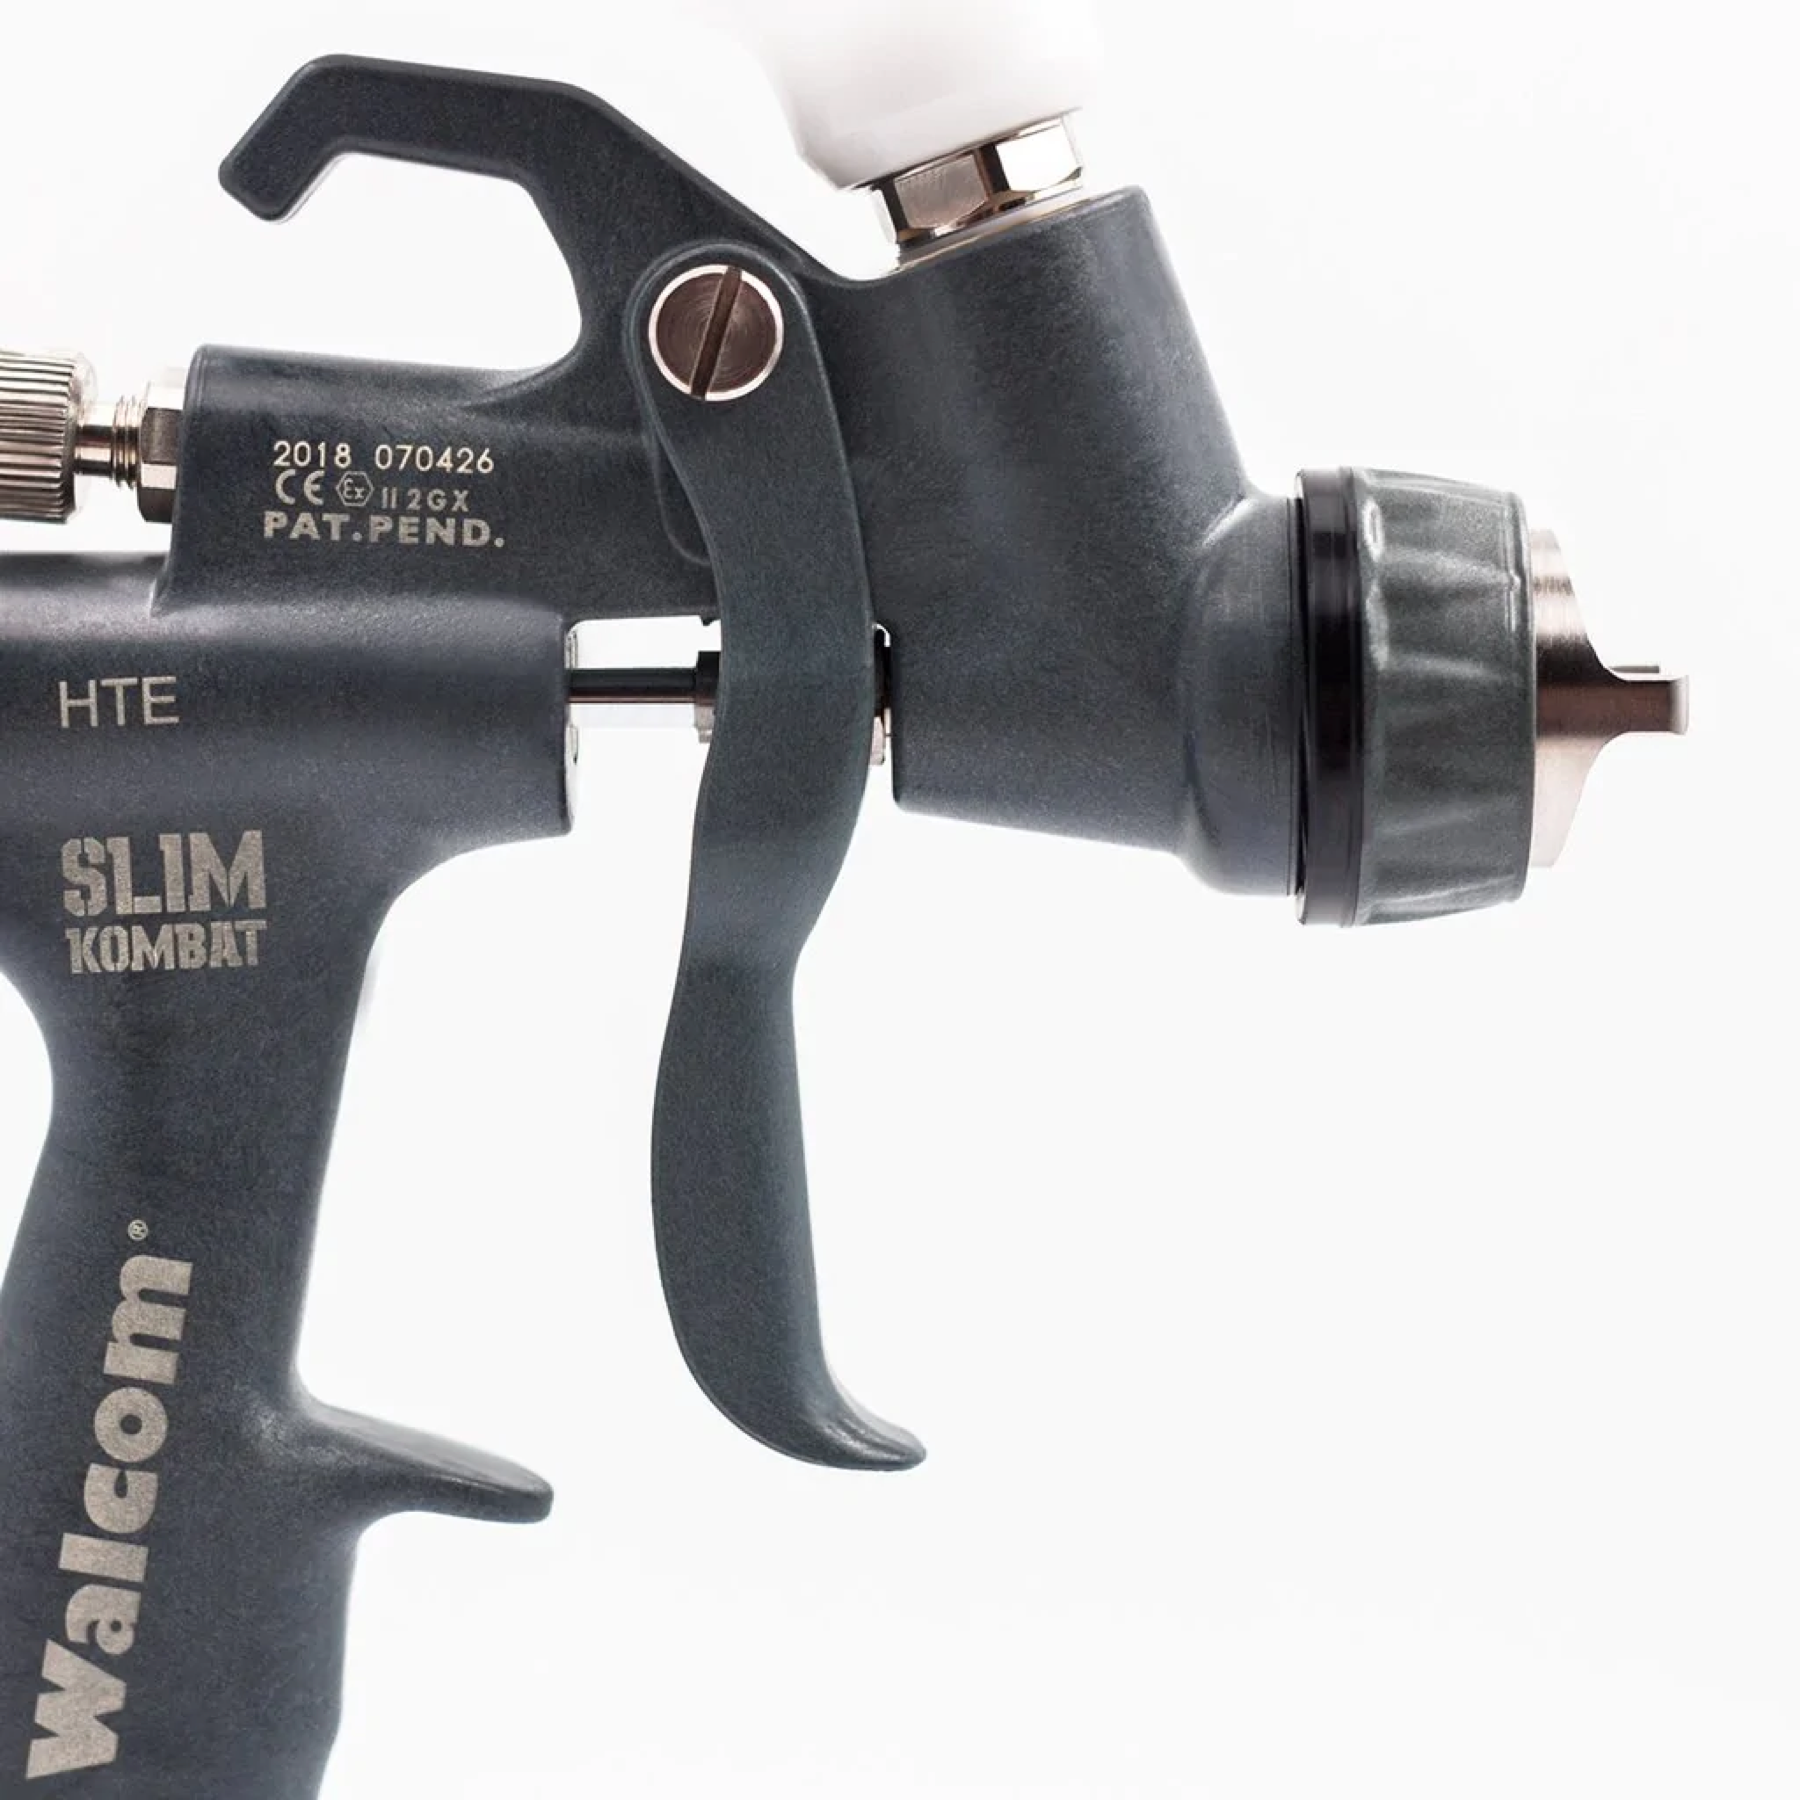 New Walcom Slim Kombat Spray Gun - Rondex Auto Body Supplies